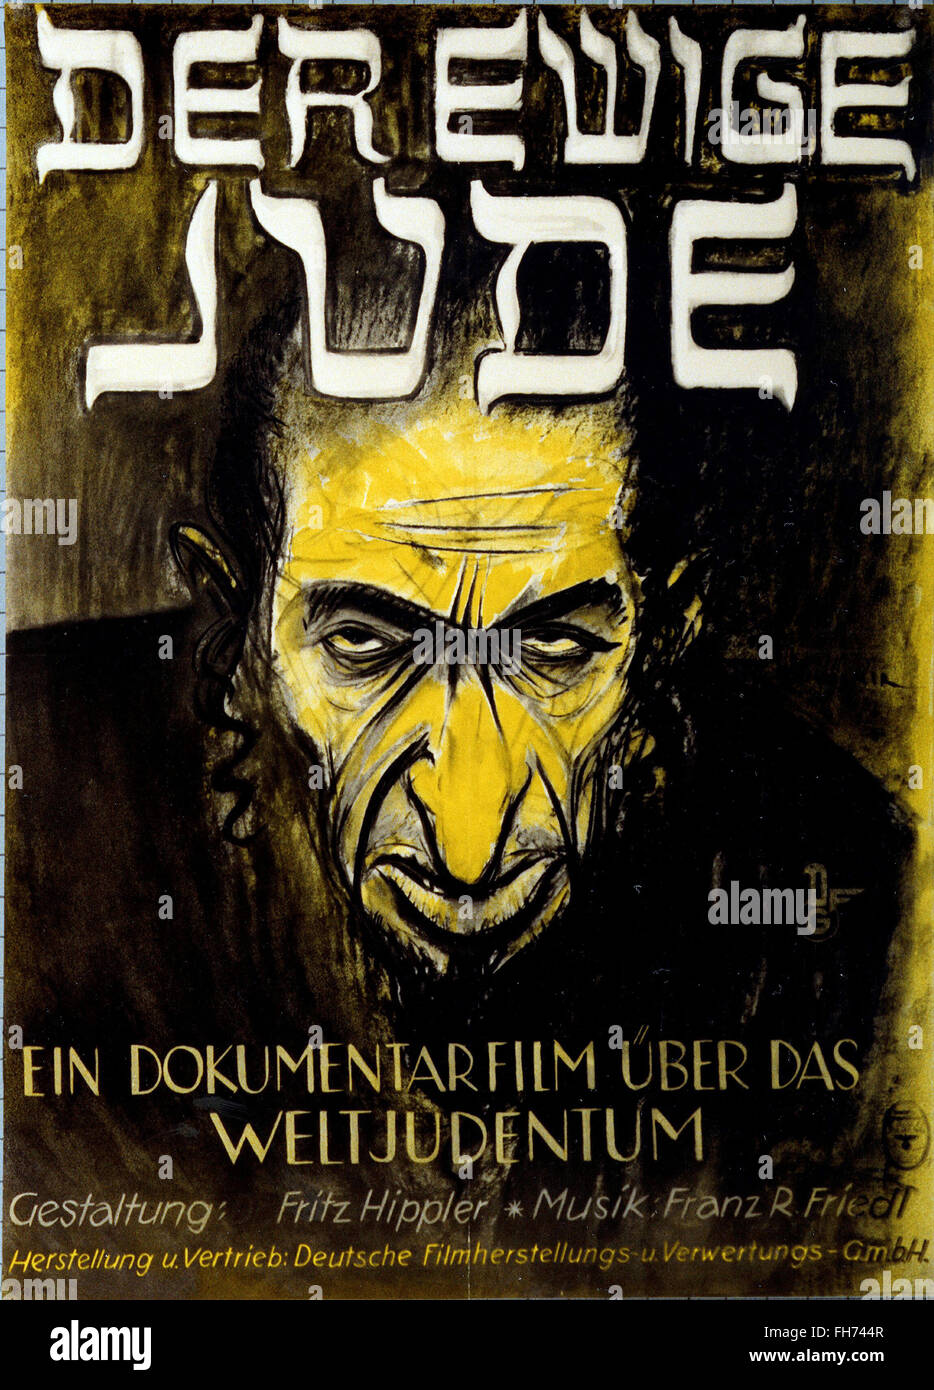 Der Ewige Jude - German Nazi Propaganda Poster - WWII Stock Photo